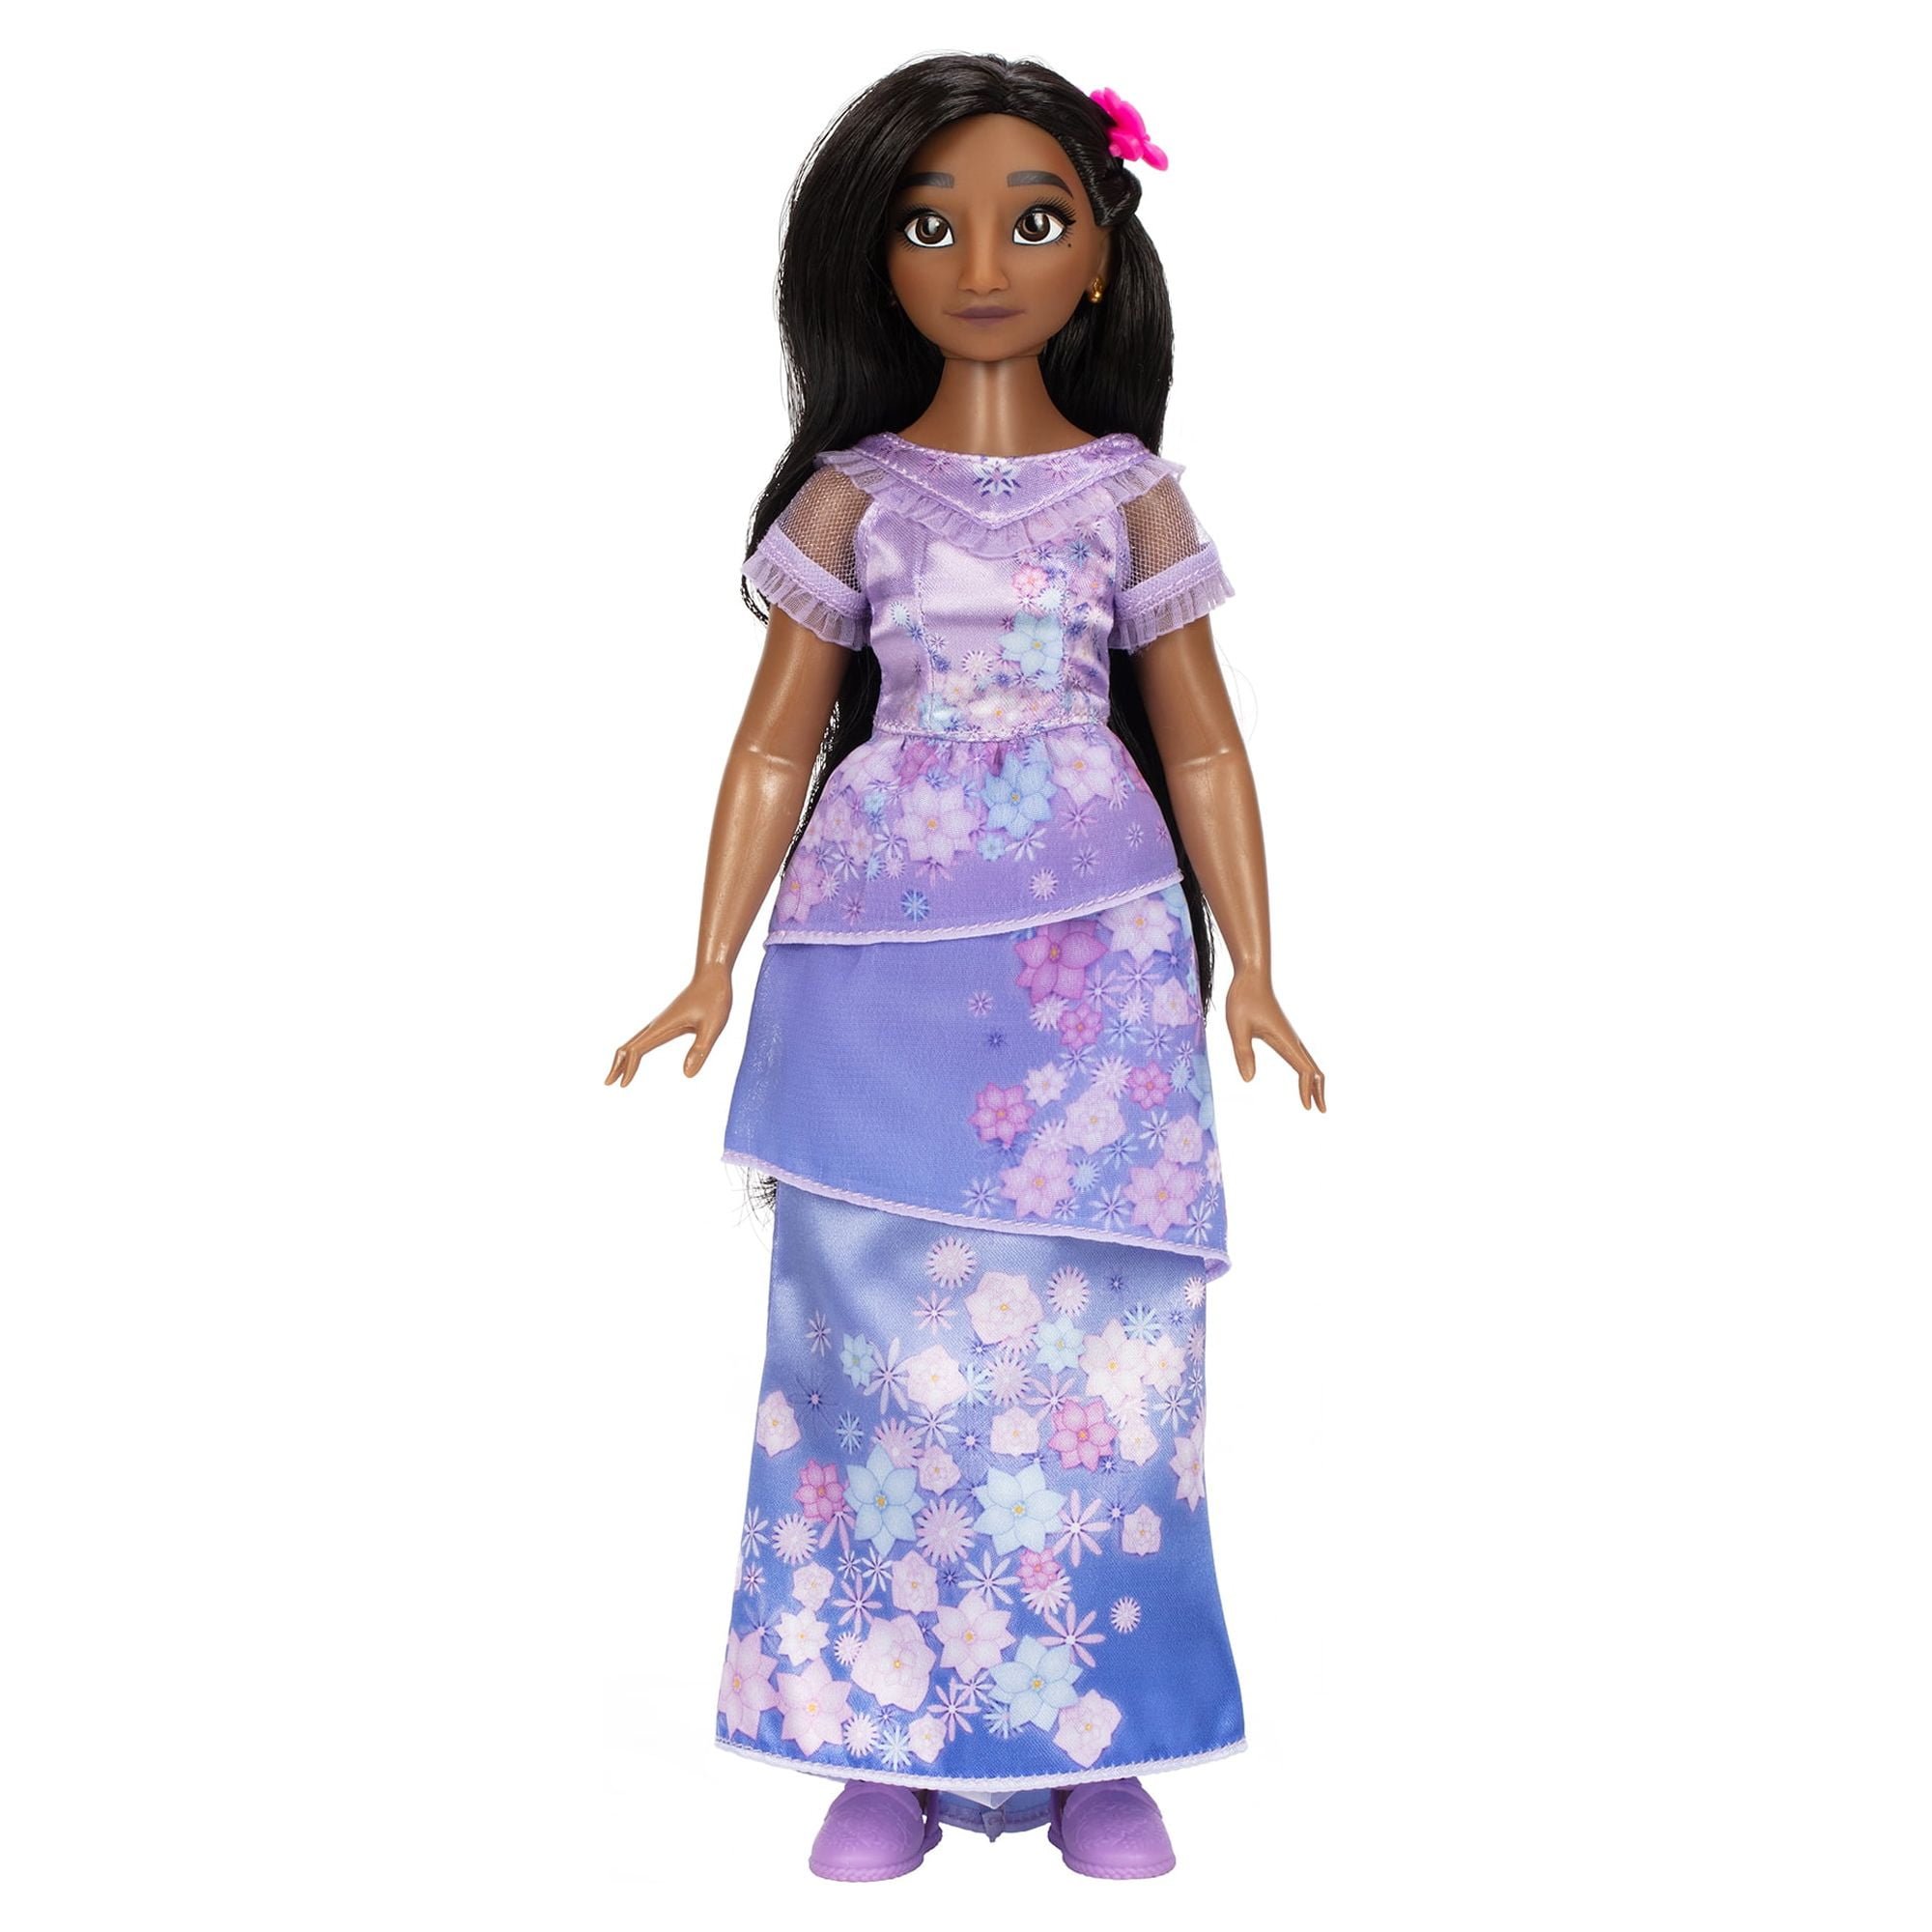 Disney Encanto Isabela 11 inch Fashion Doll Includes Dress, Shoes